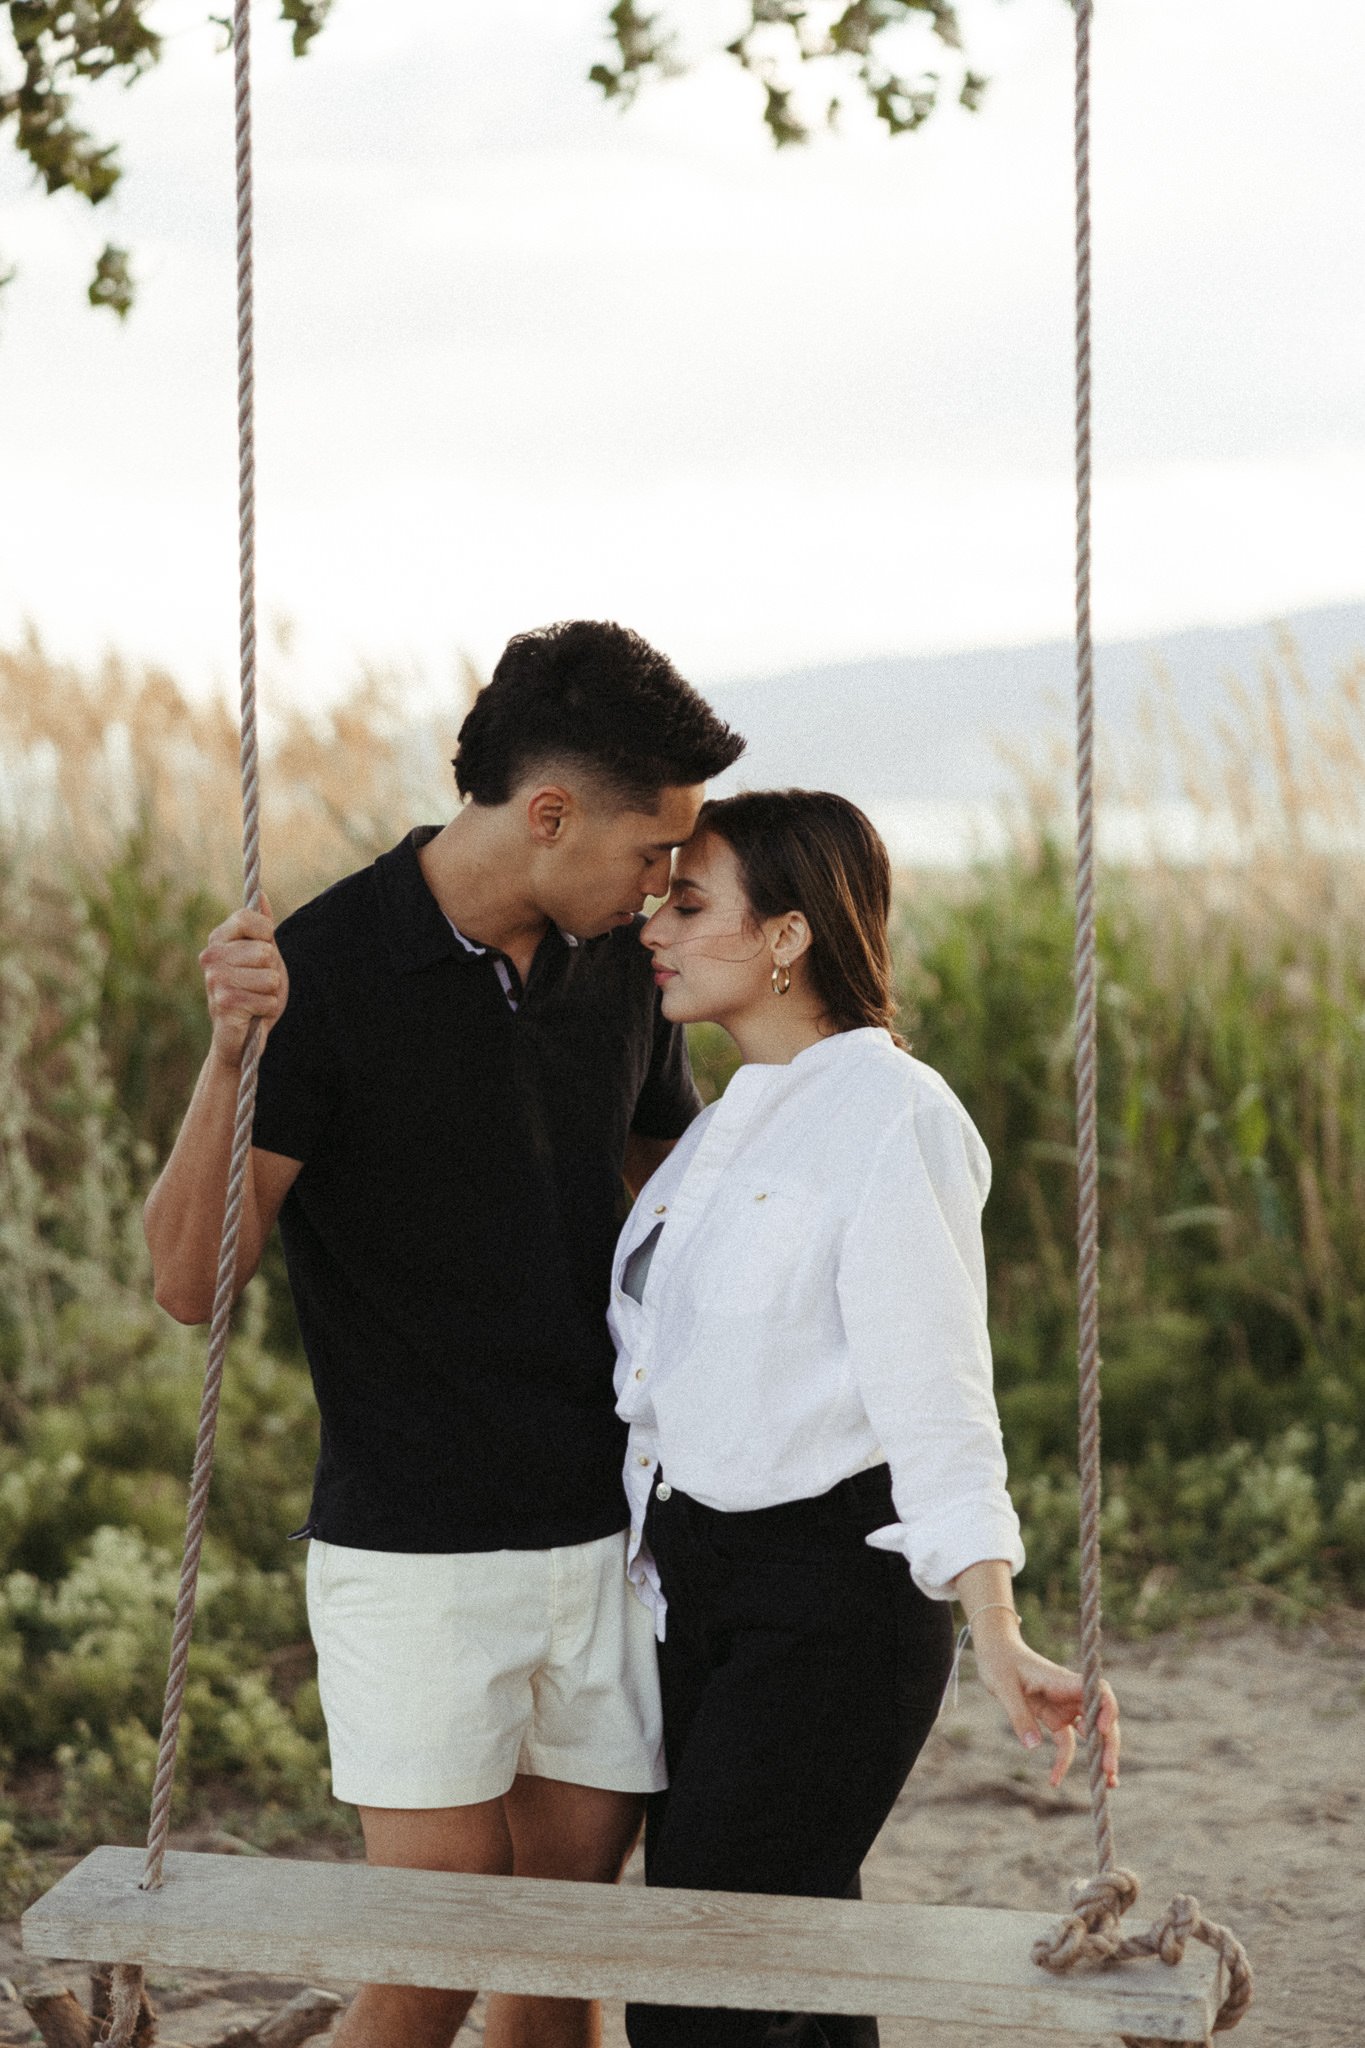 Casual-Couple-Photoshoot-Utah-Lake-Hopes-and-cheers-photo-11.jpg